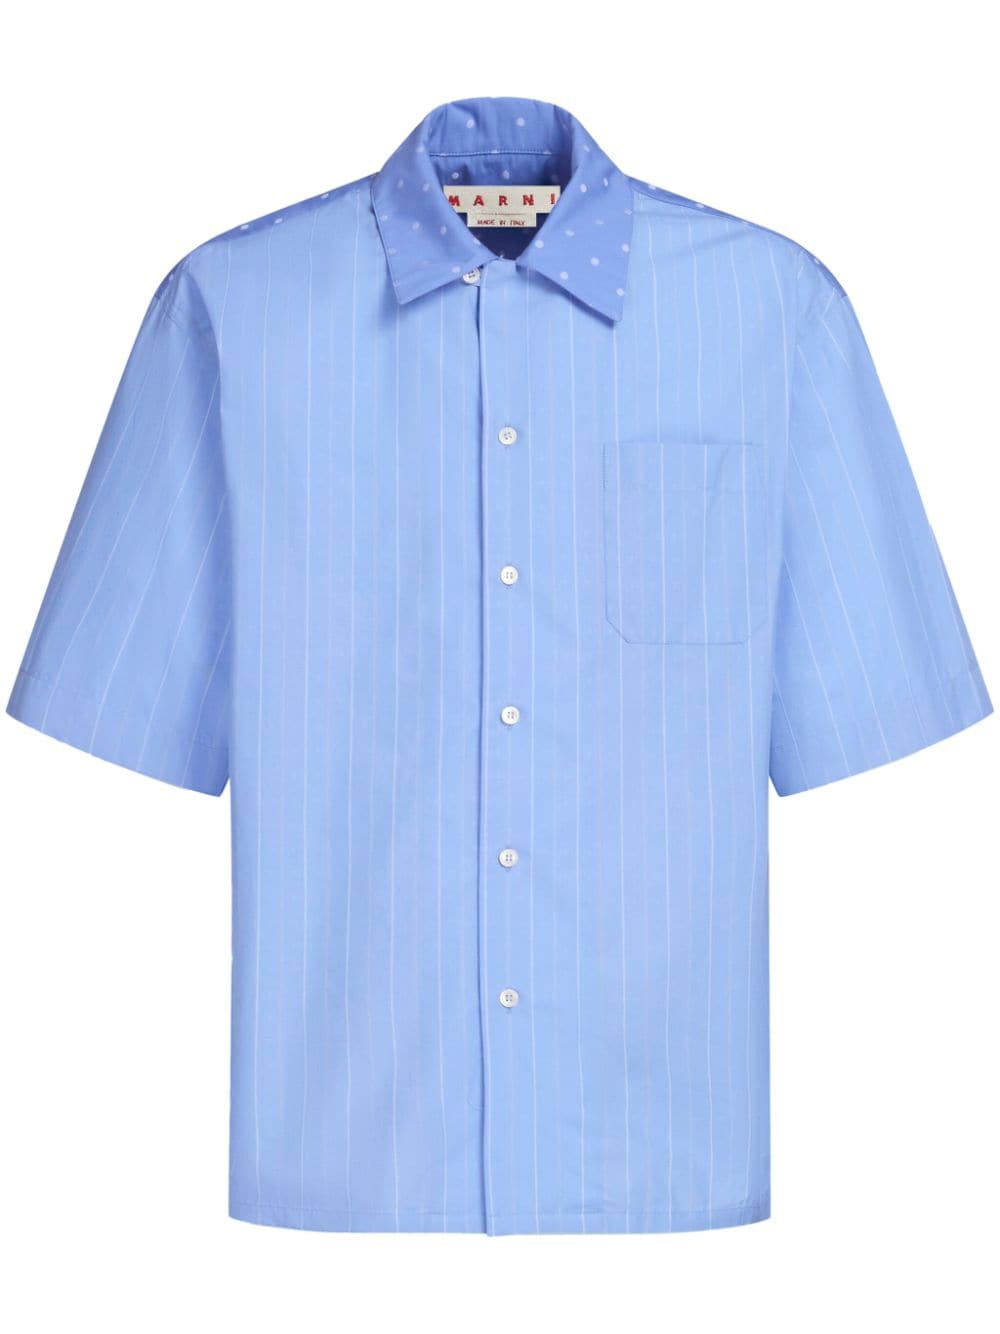 Marni pinstriped bowling shirt - Blue von Marni